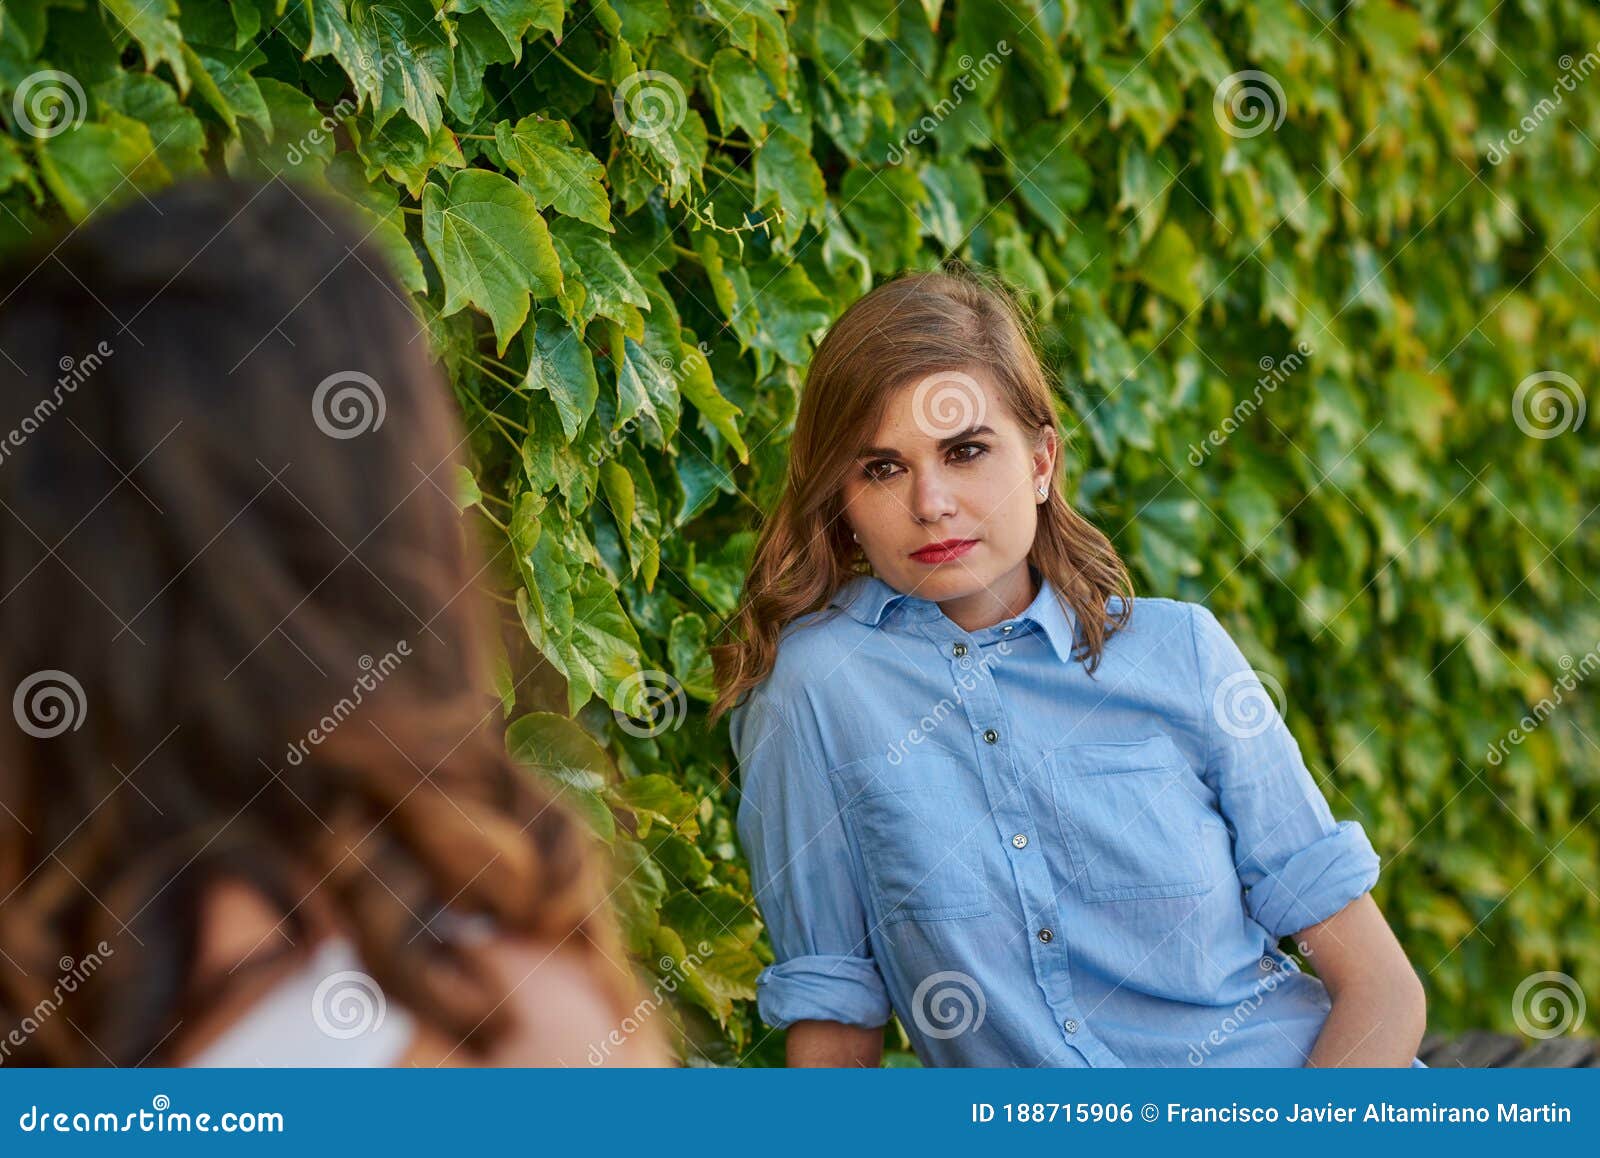 two friends talking in a park